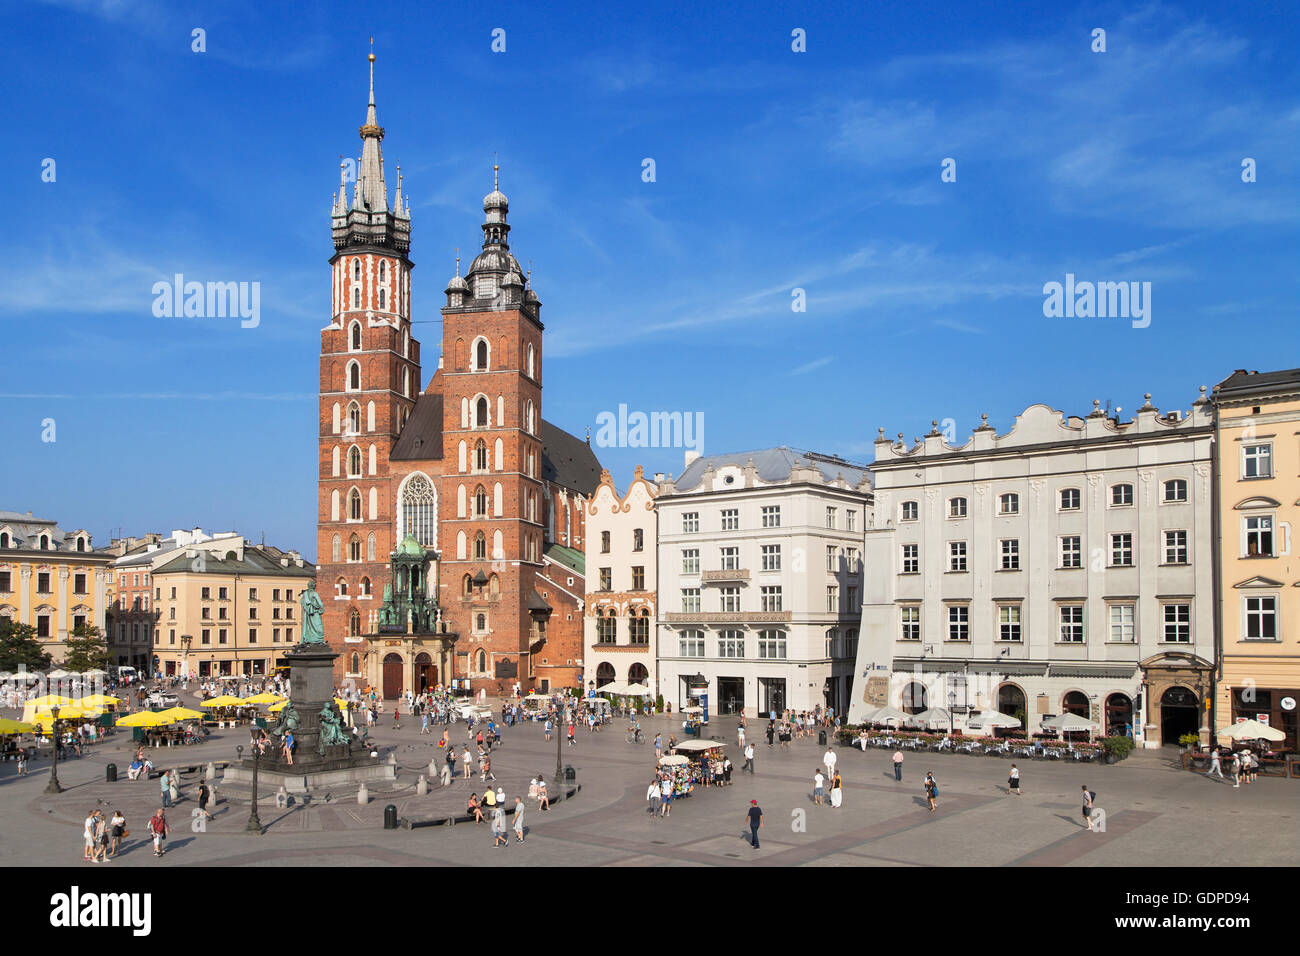 Main Market Square of Krakow, Poland. Stock Photo